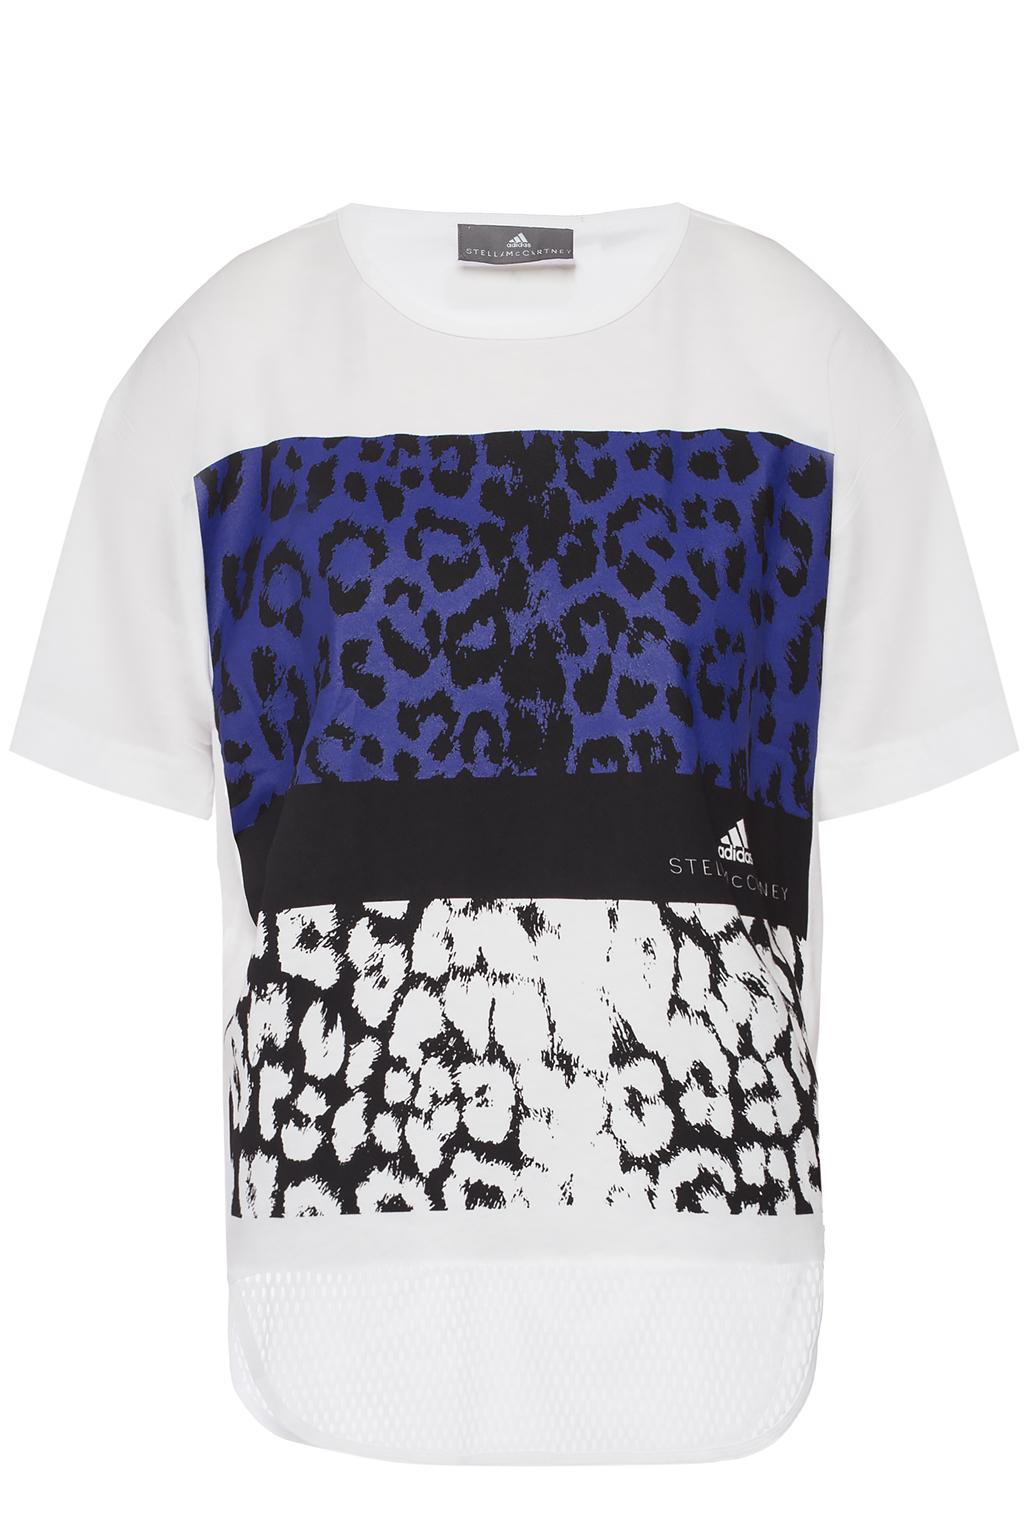 adidas leopard print shirt